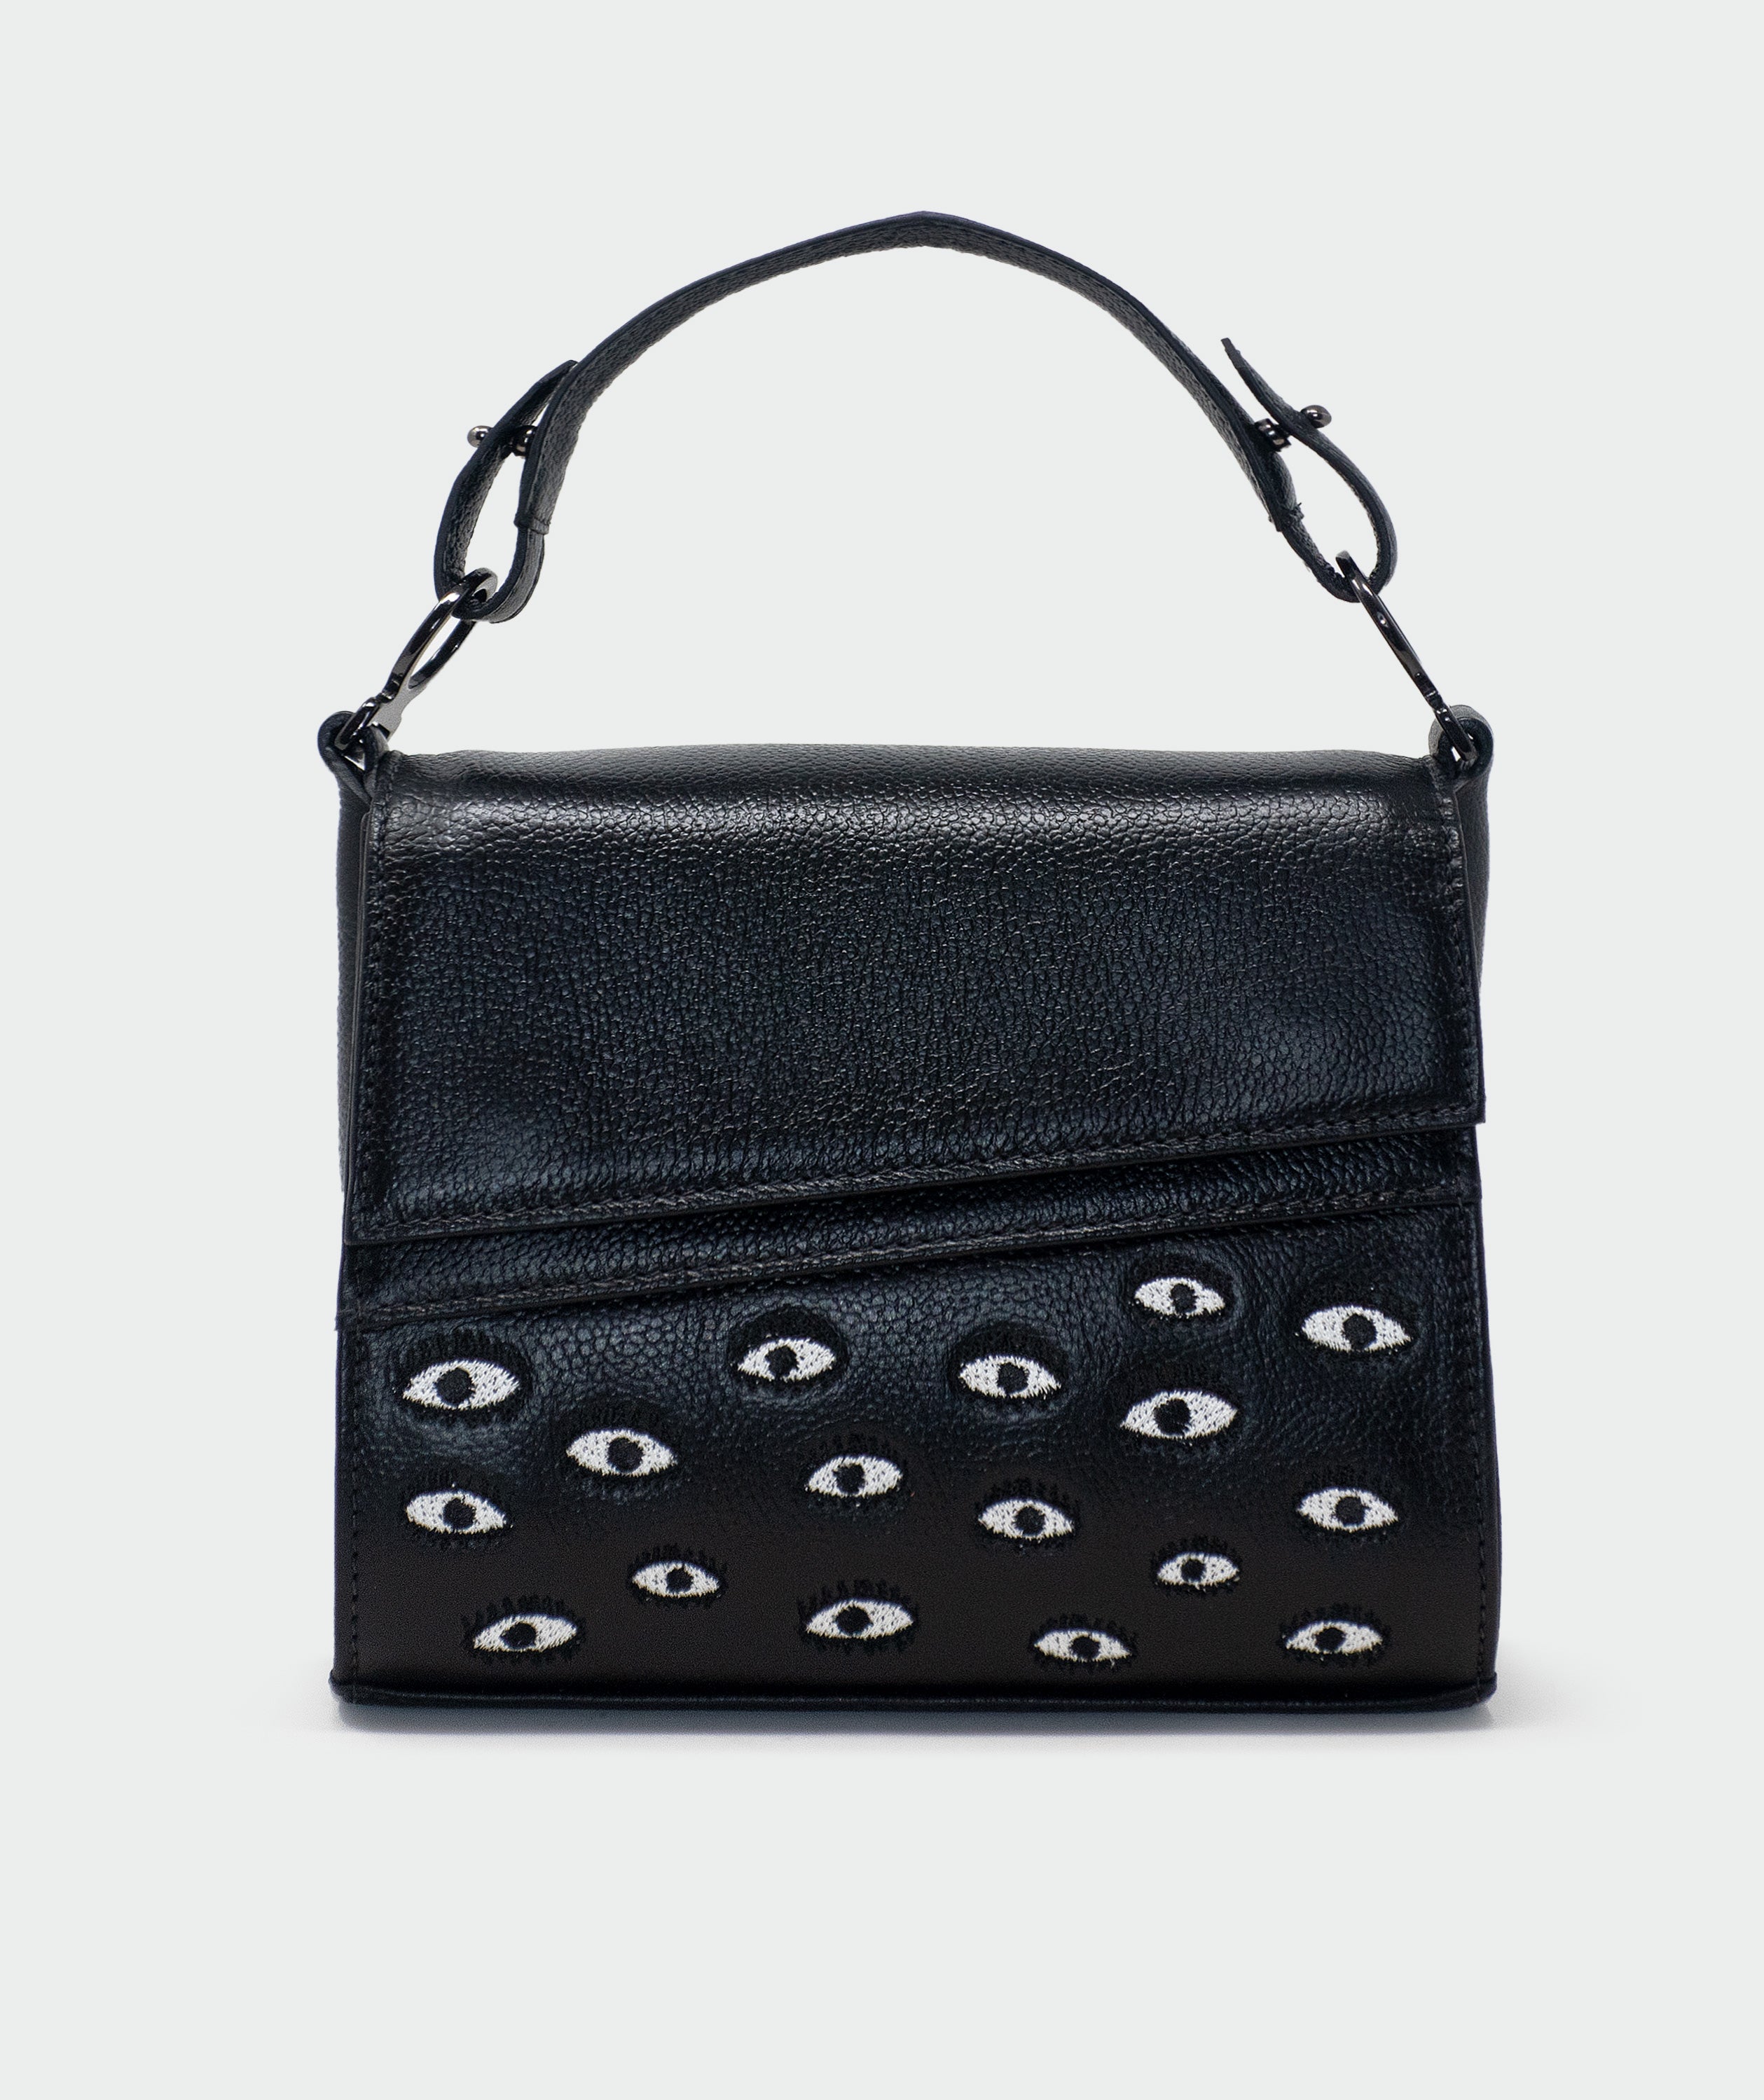 Anastasio Micro Crossbody Handbag Black Leather - Eyes Embroidery Print - Front view